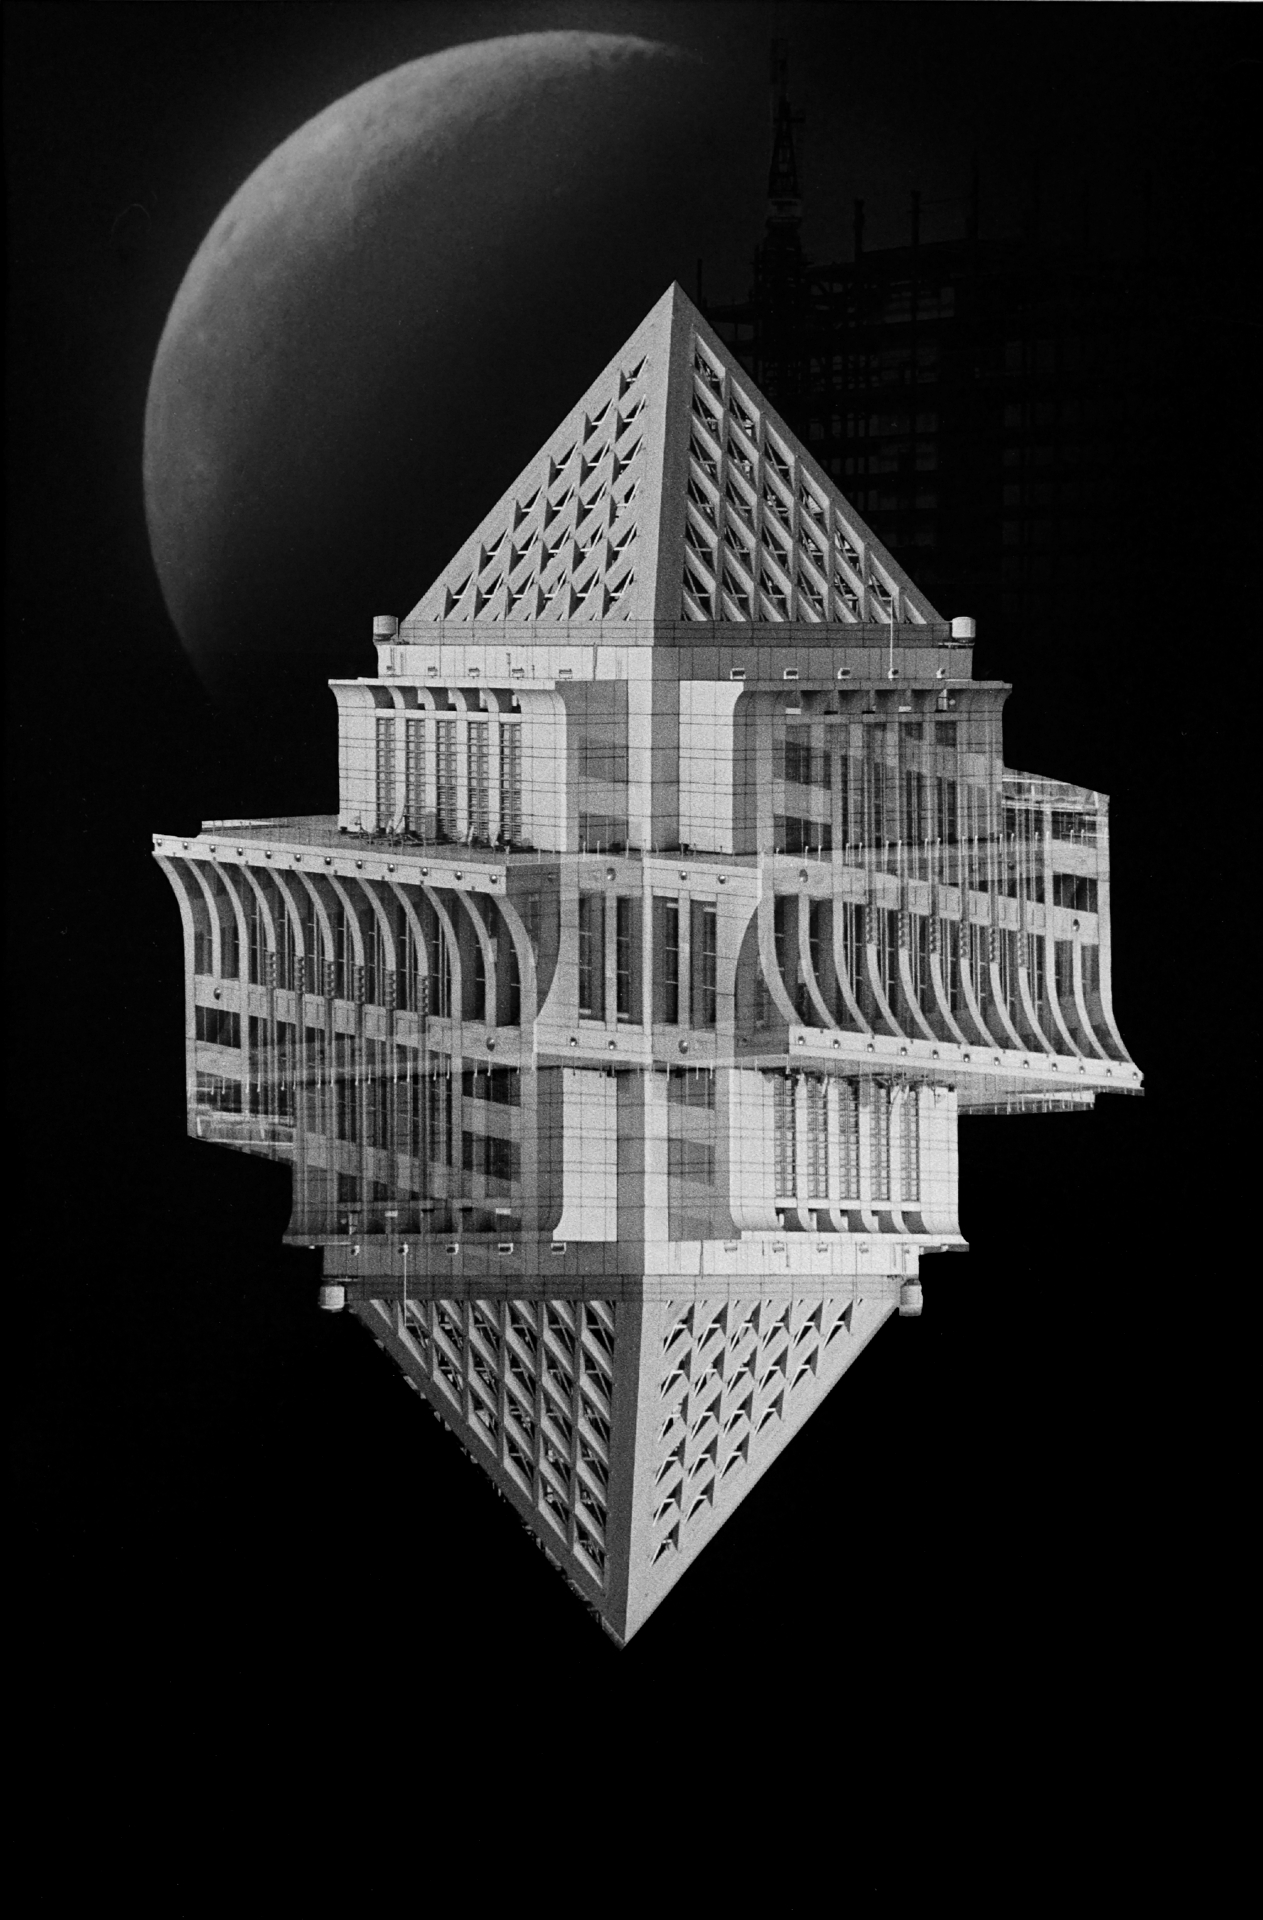 tk web by David Allen (“Space Triptych: Split level | Fleet | Tesseract Kazoo” Moon negatives by Richard Davies)